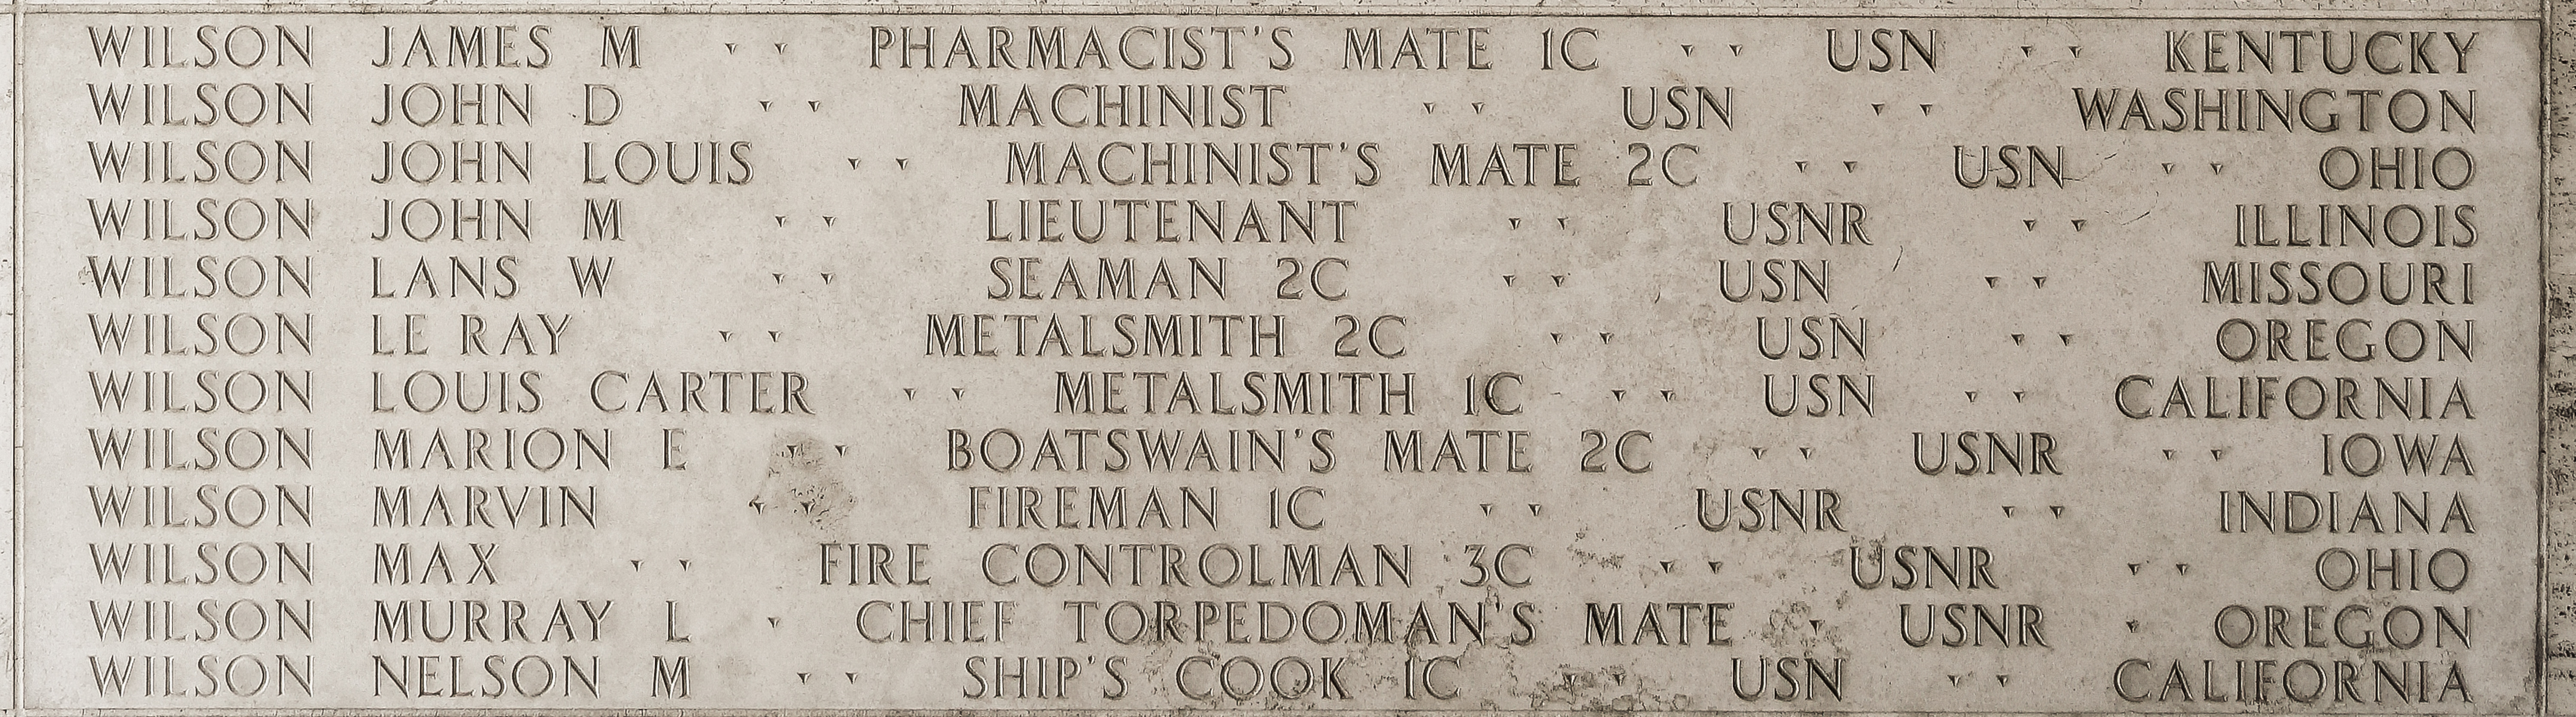 James M. Wilson, Pharmacist's Mate First Class